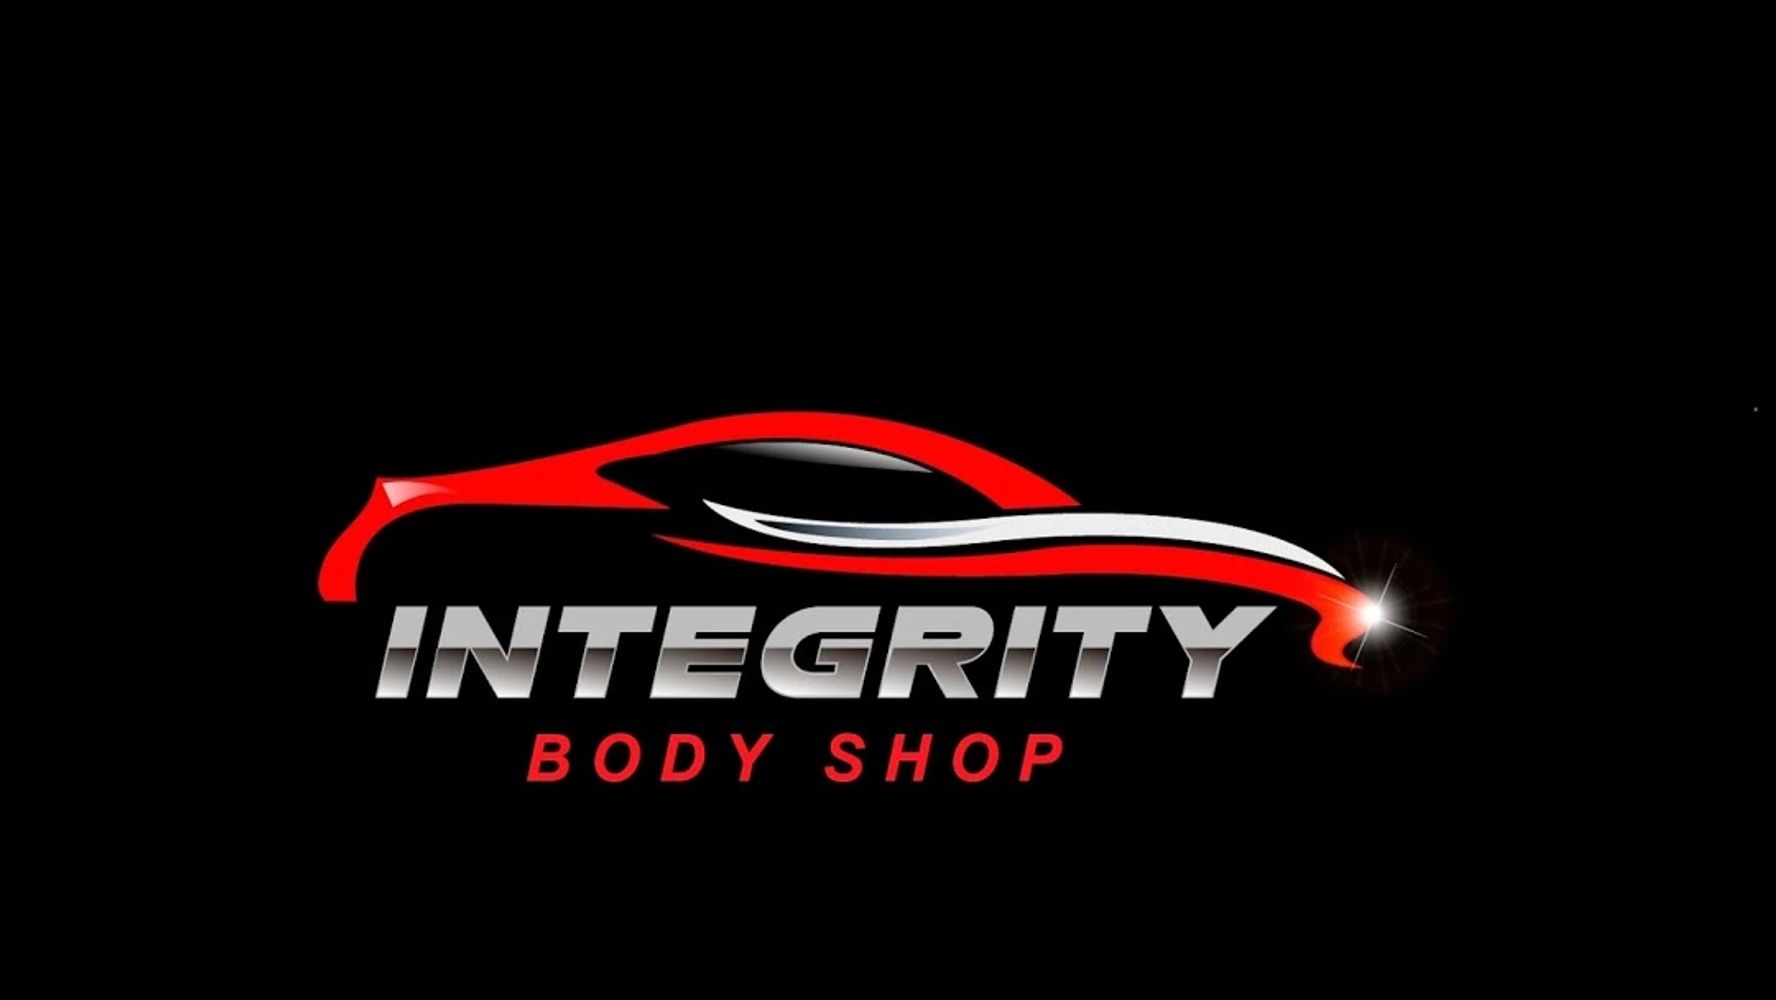 Integrity Body Shop Auto Body Shop Las Cruces NM Body Dent Repair  Mobile Car Wash  Ceremaic Coating